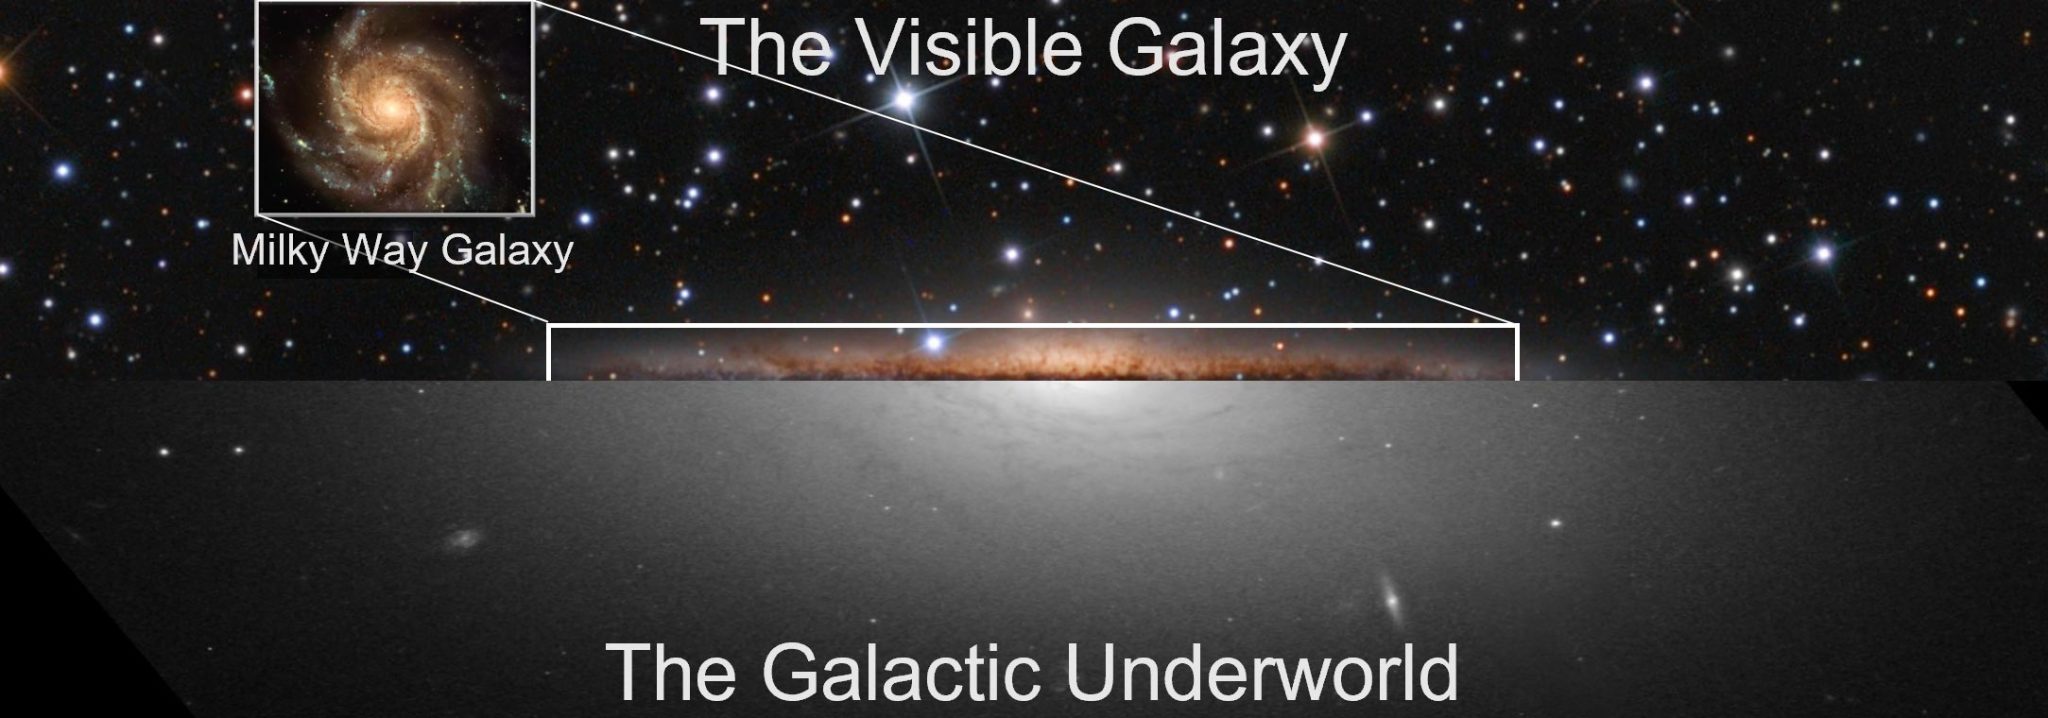 The visible Milky Way galaxy versus its galactic underworld